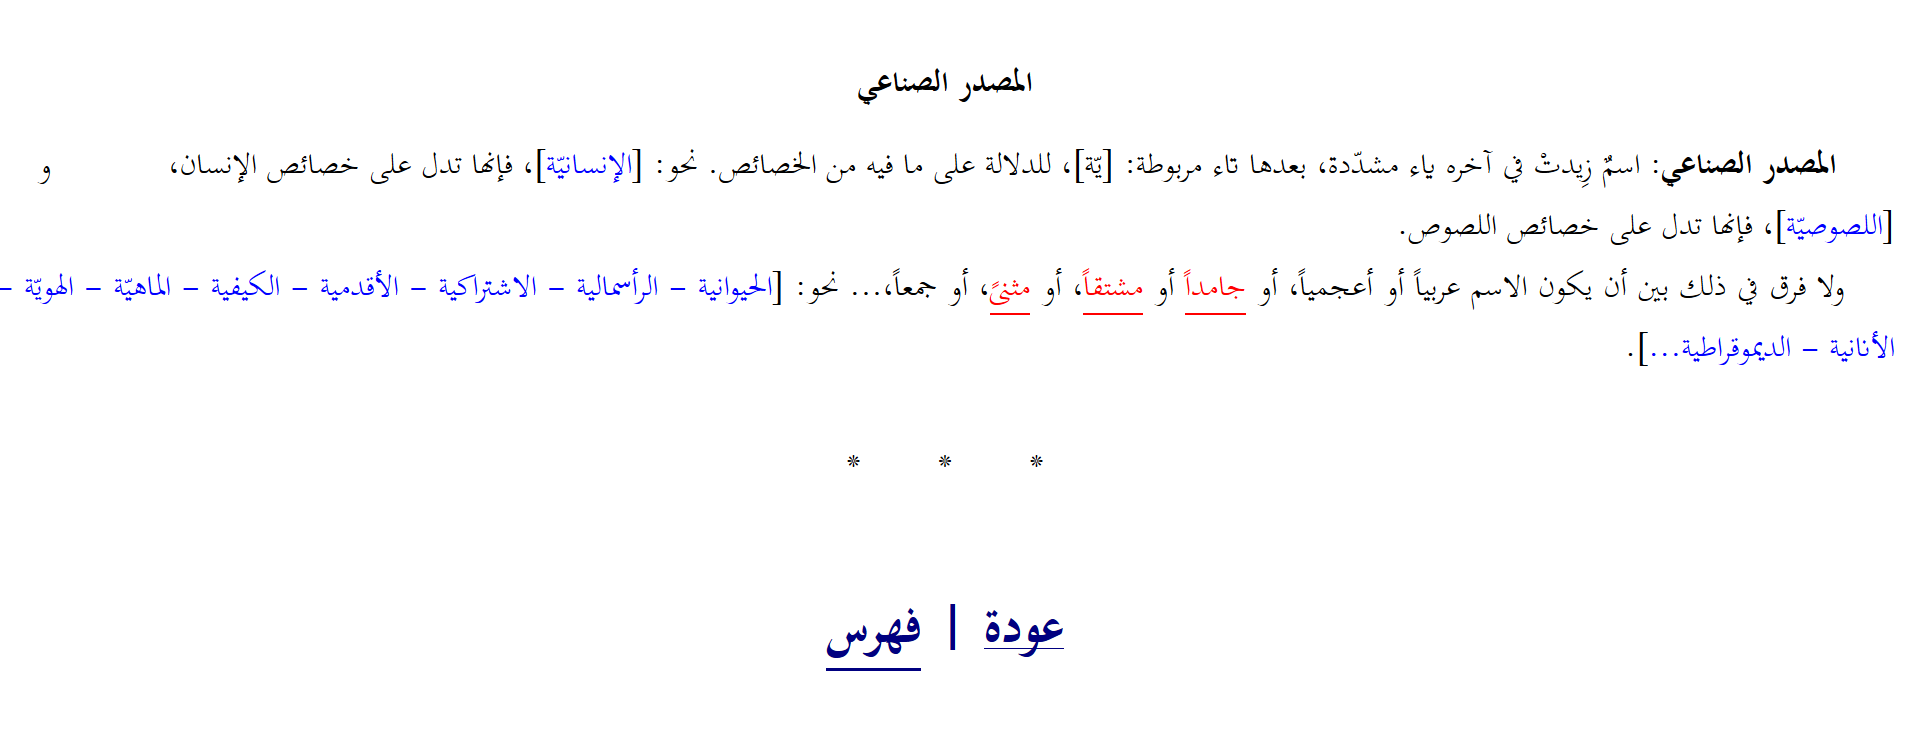 Arabic Grammar in Arabic